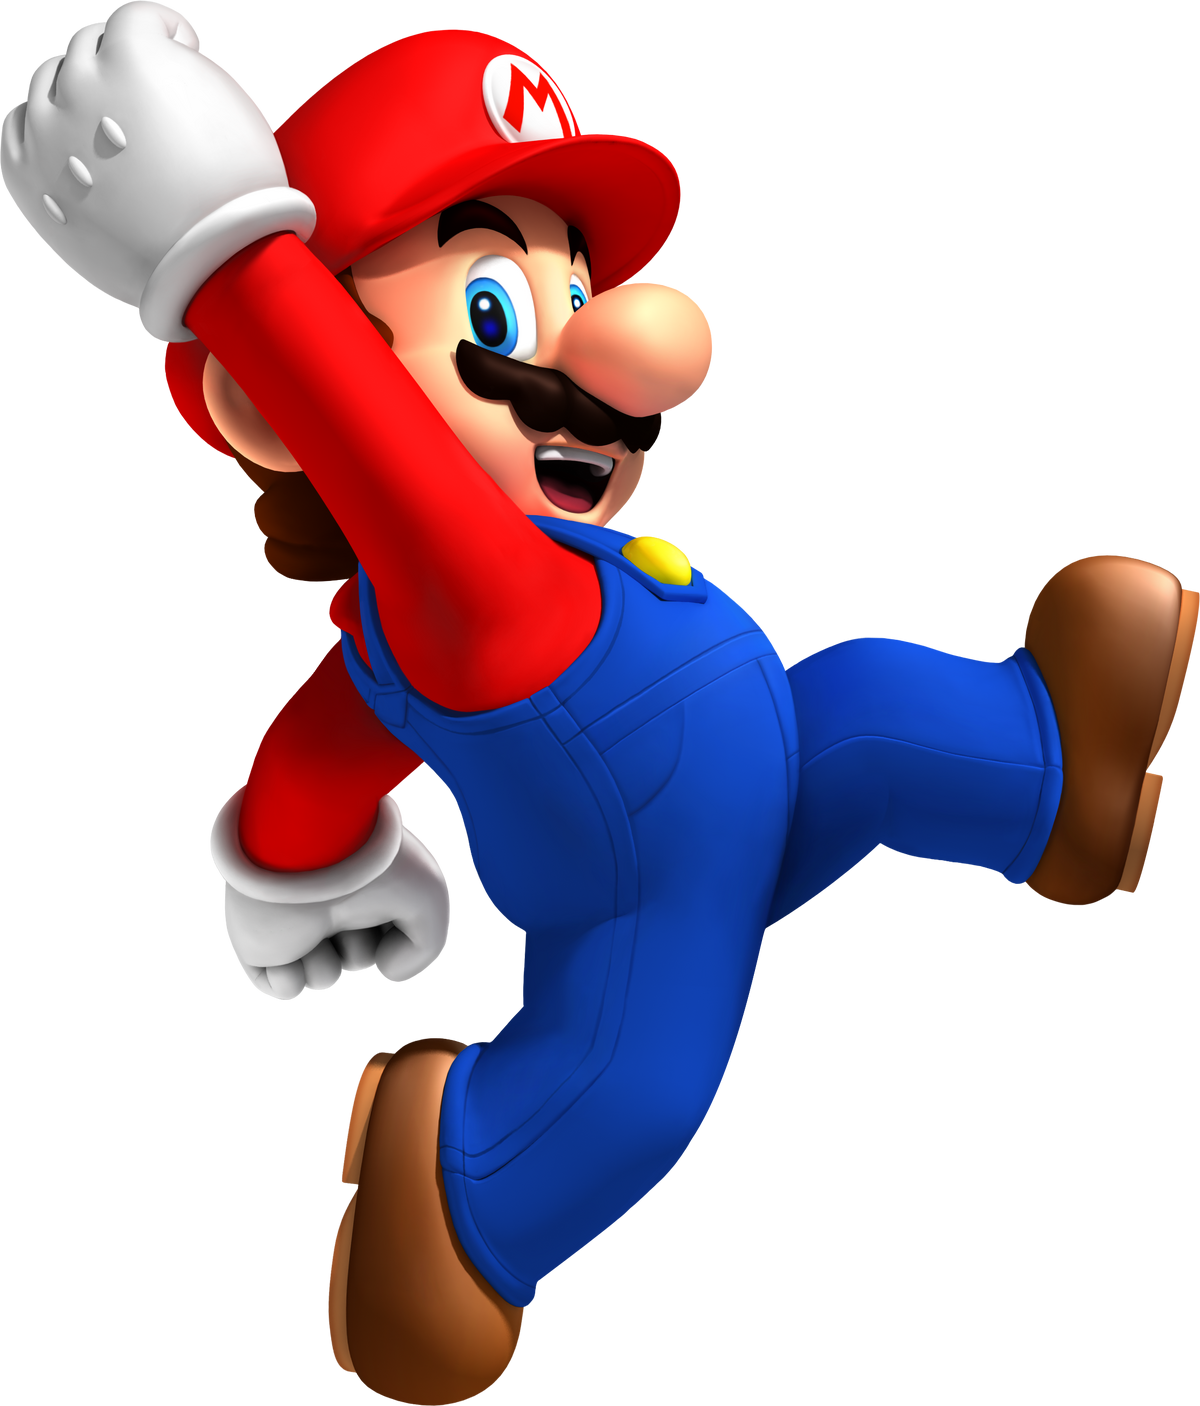 Super Mario Galaxy - Super Mario Wiki, the Mario encyclopedia